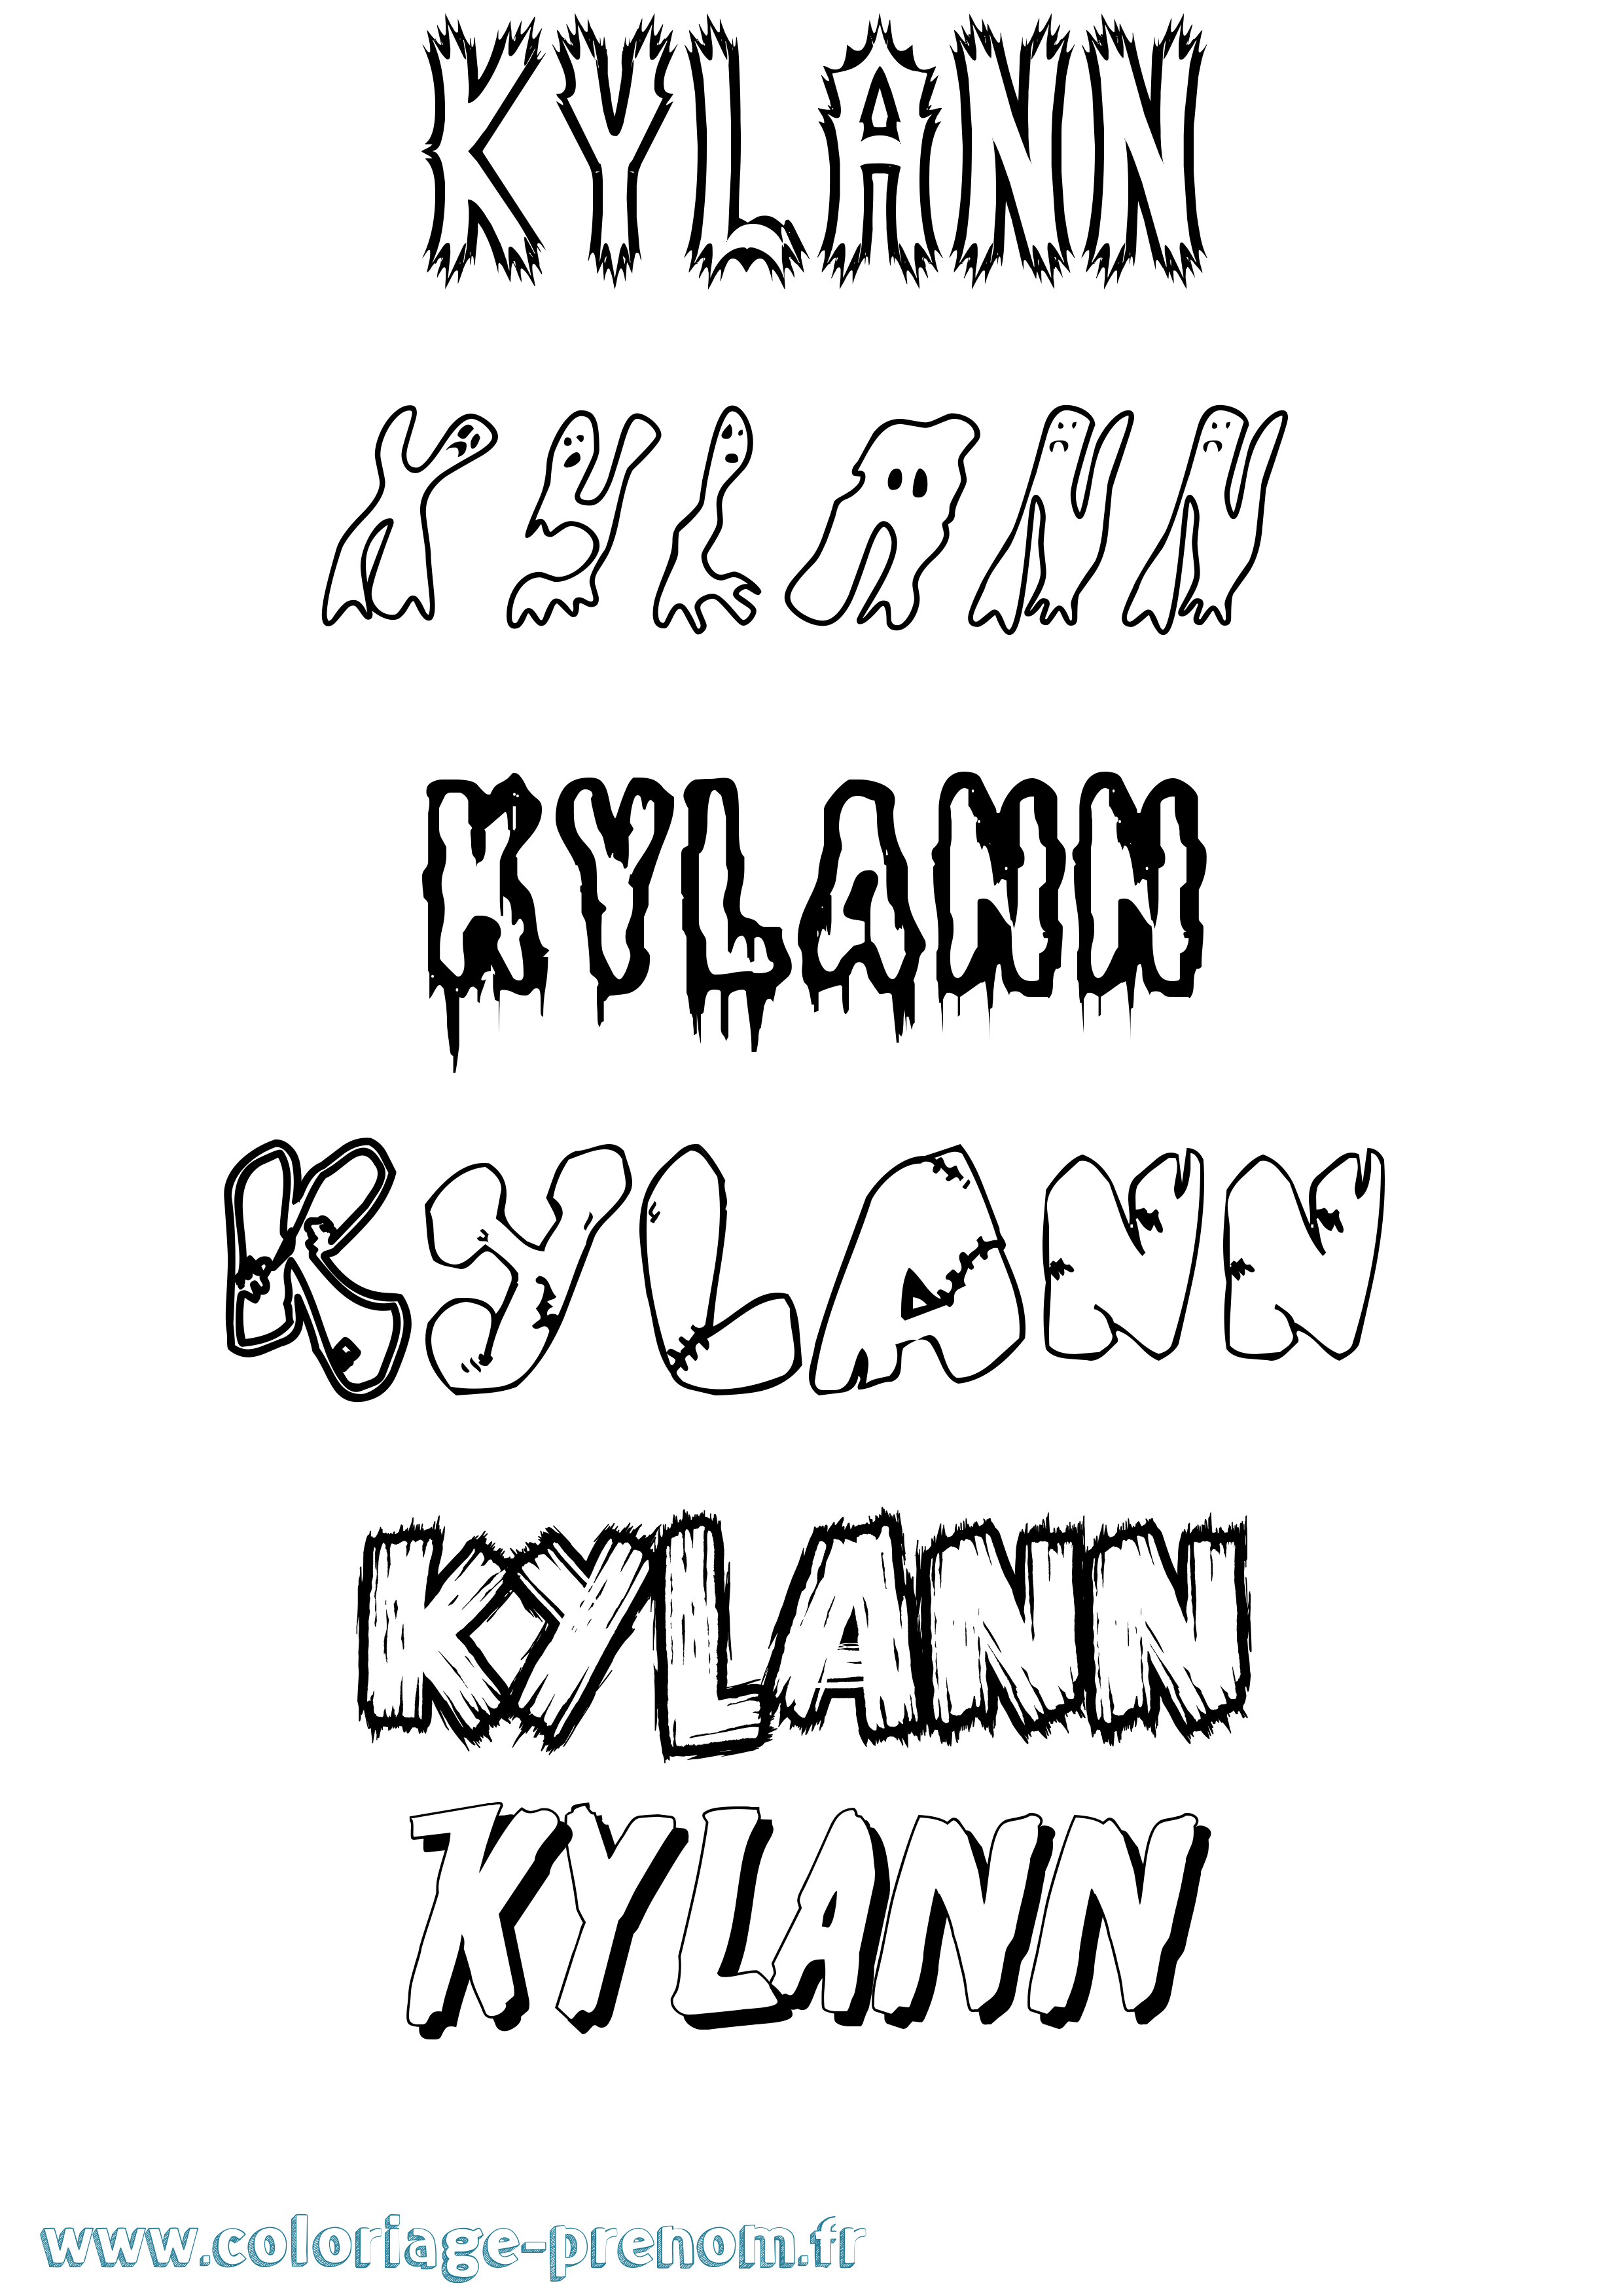 Coloriage prénom Kylann Frisson